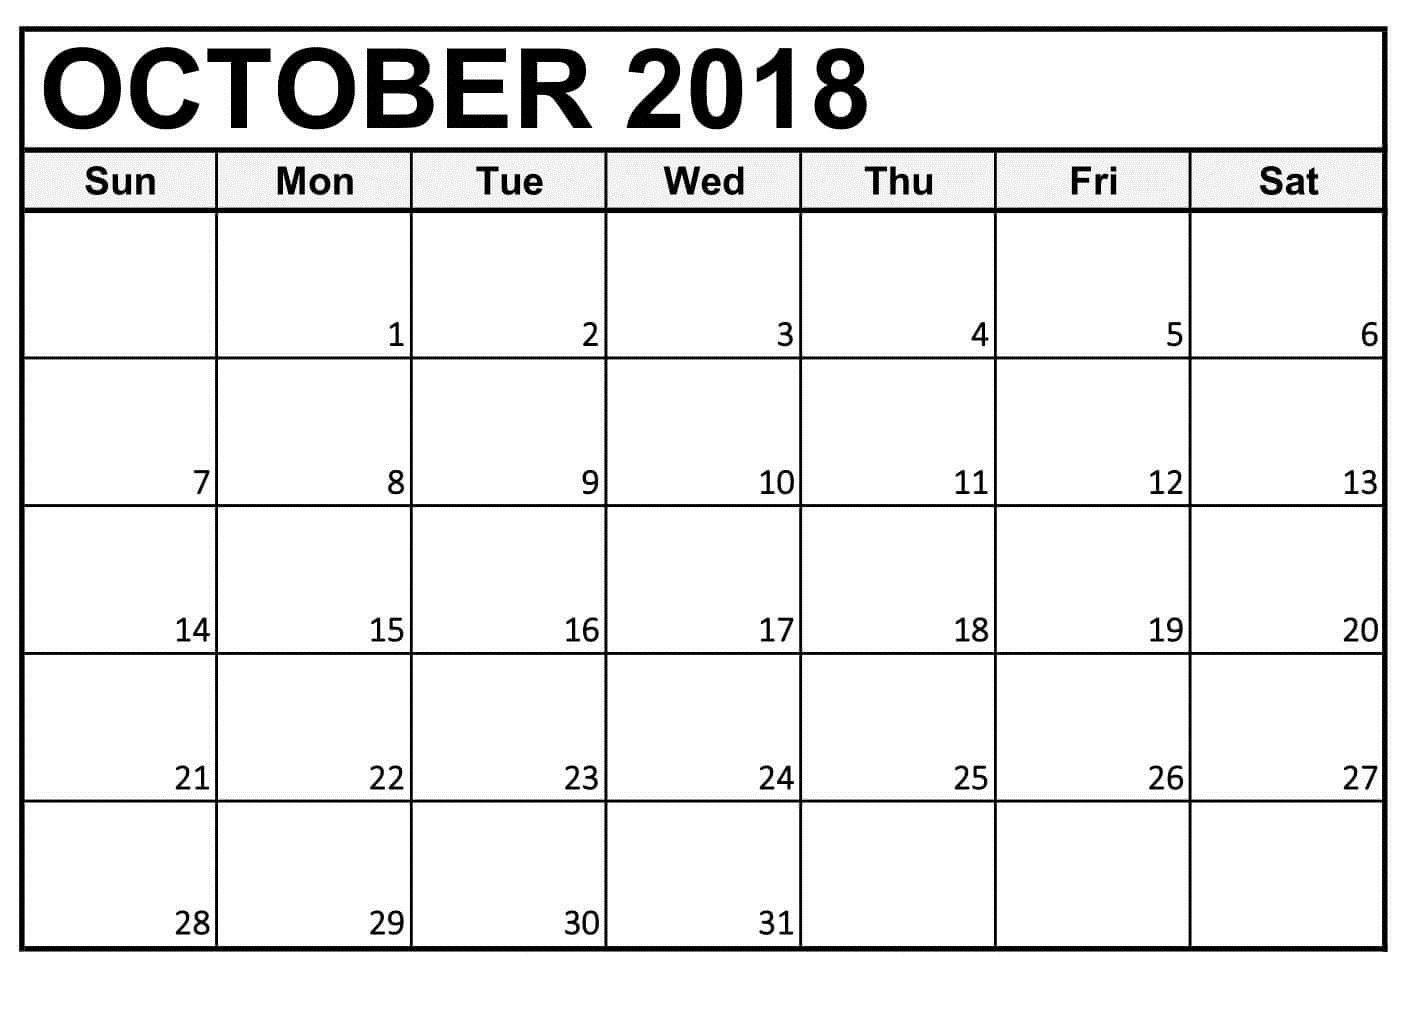 Free Printable Calendar Large Numbers | Ten Free Printable Calendar 2020-2021-Sepetember 2021 Calendar With Big Numbers